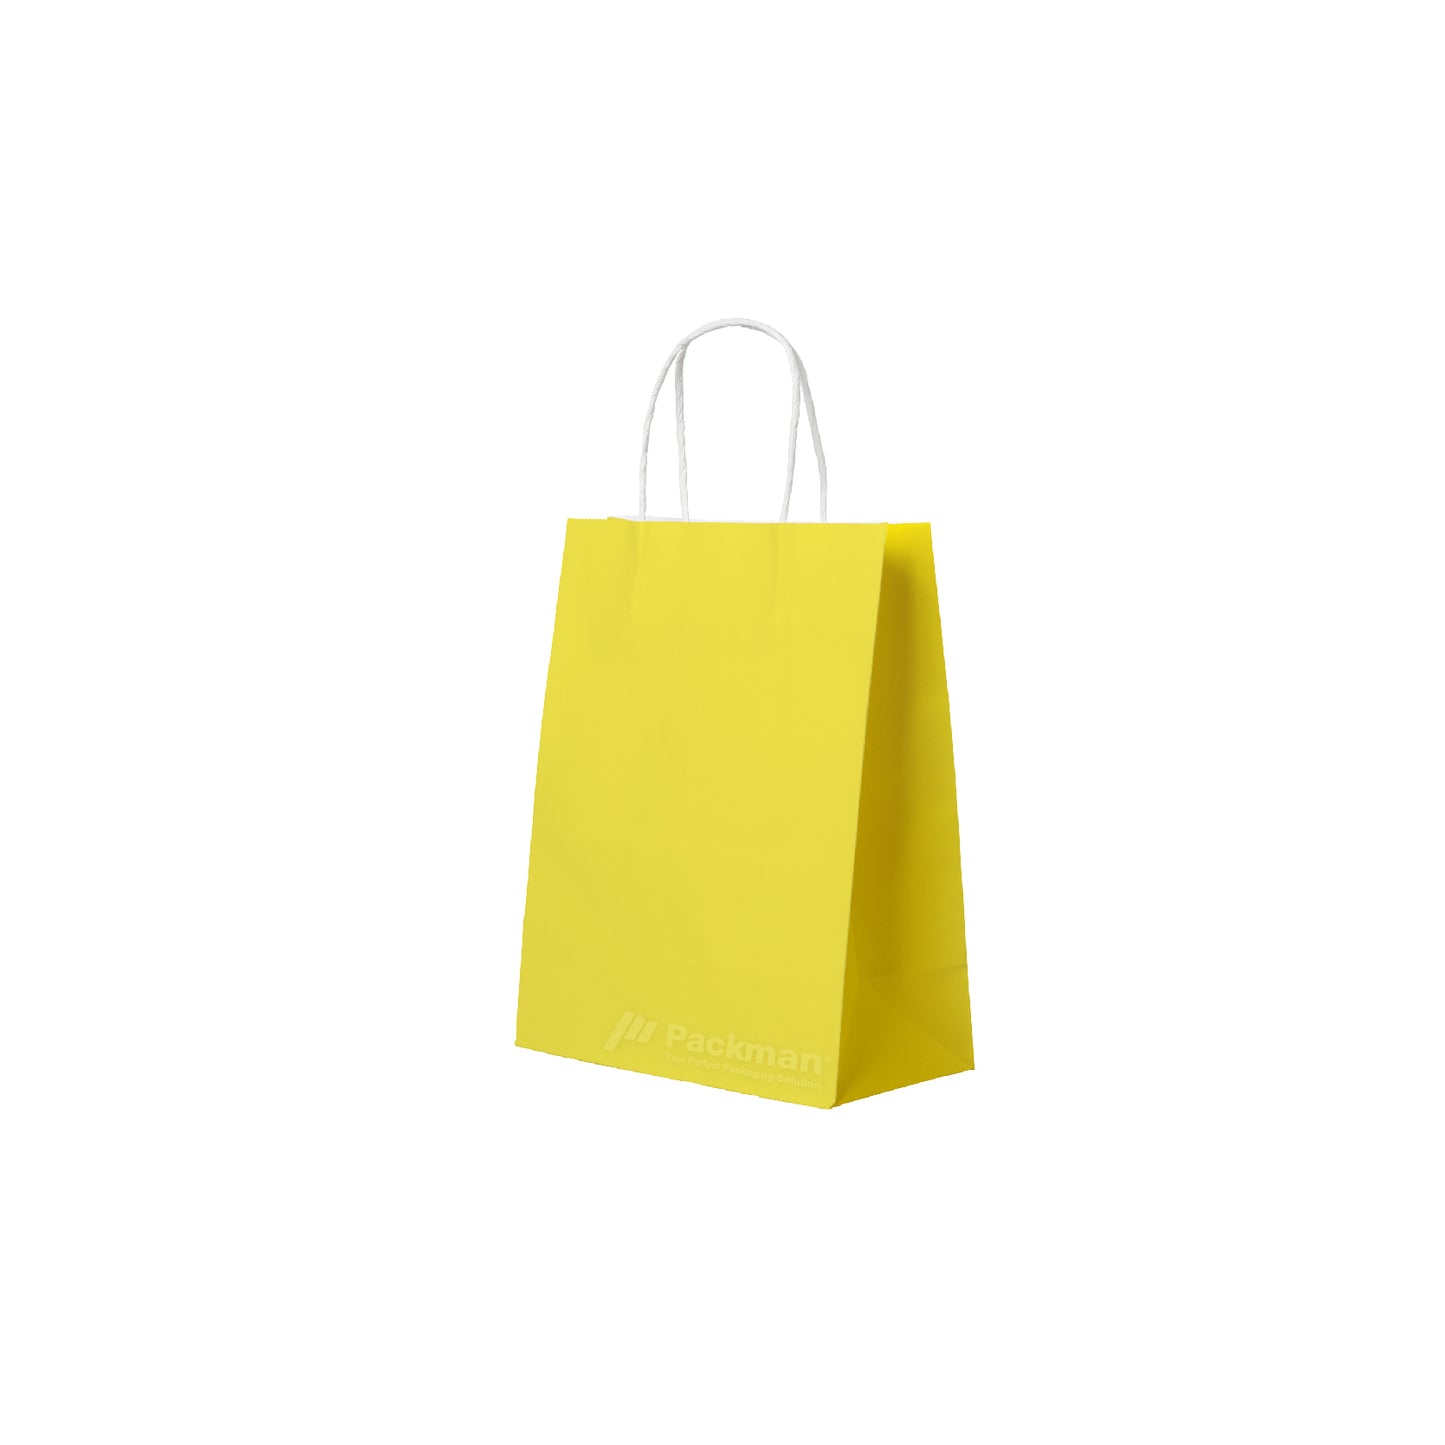 15 x 8 x 21cm Yellow Paper Bag (100pcs)